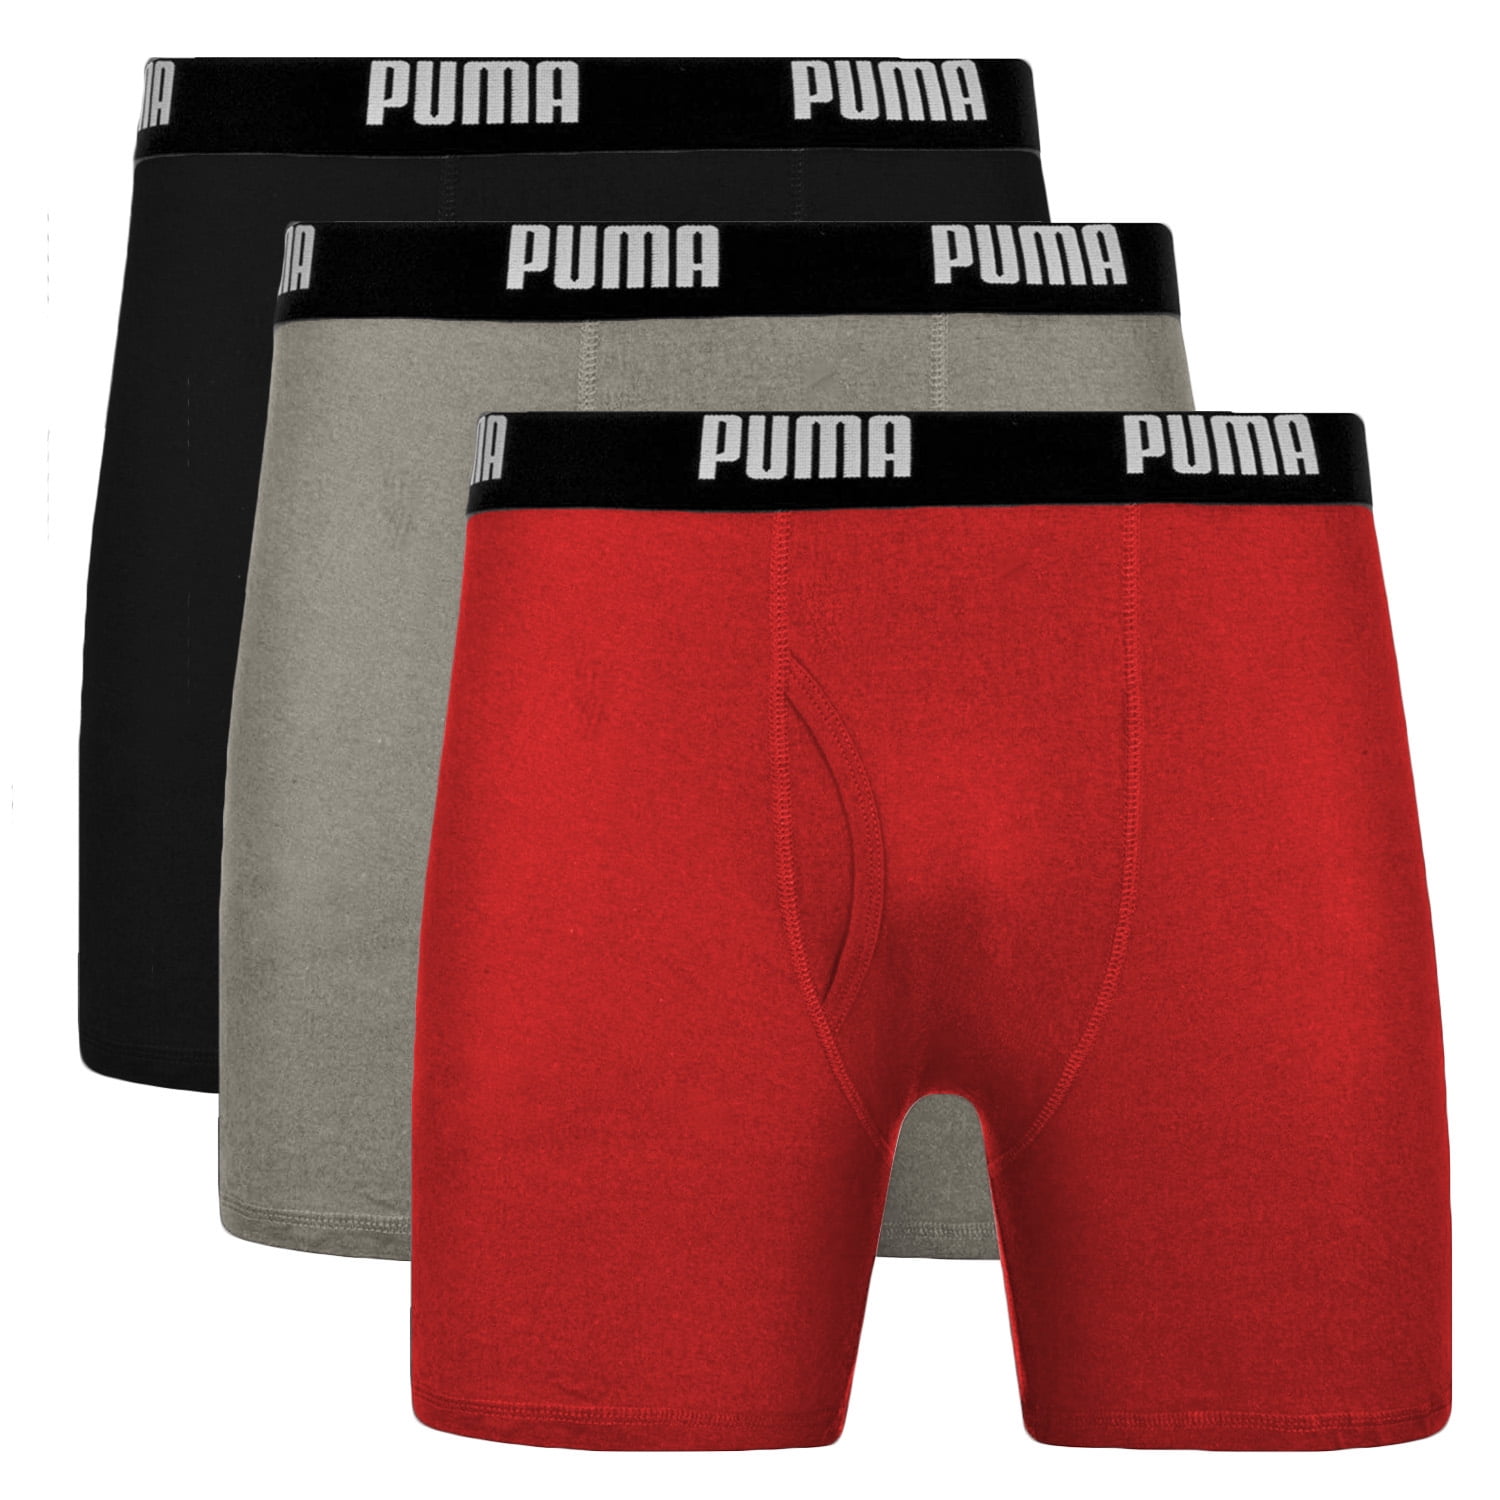 3-pack of puma men's boxer briefs